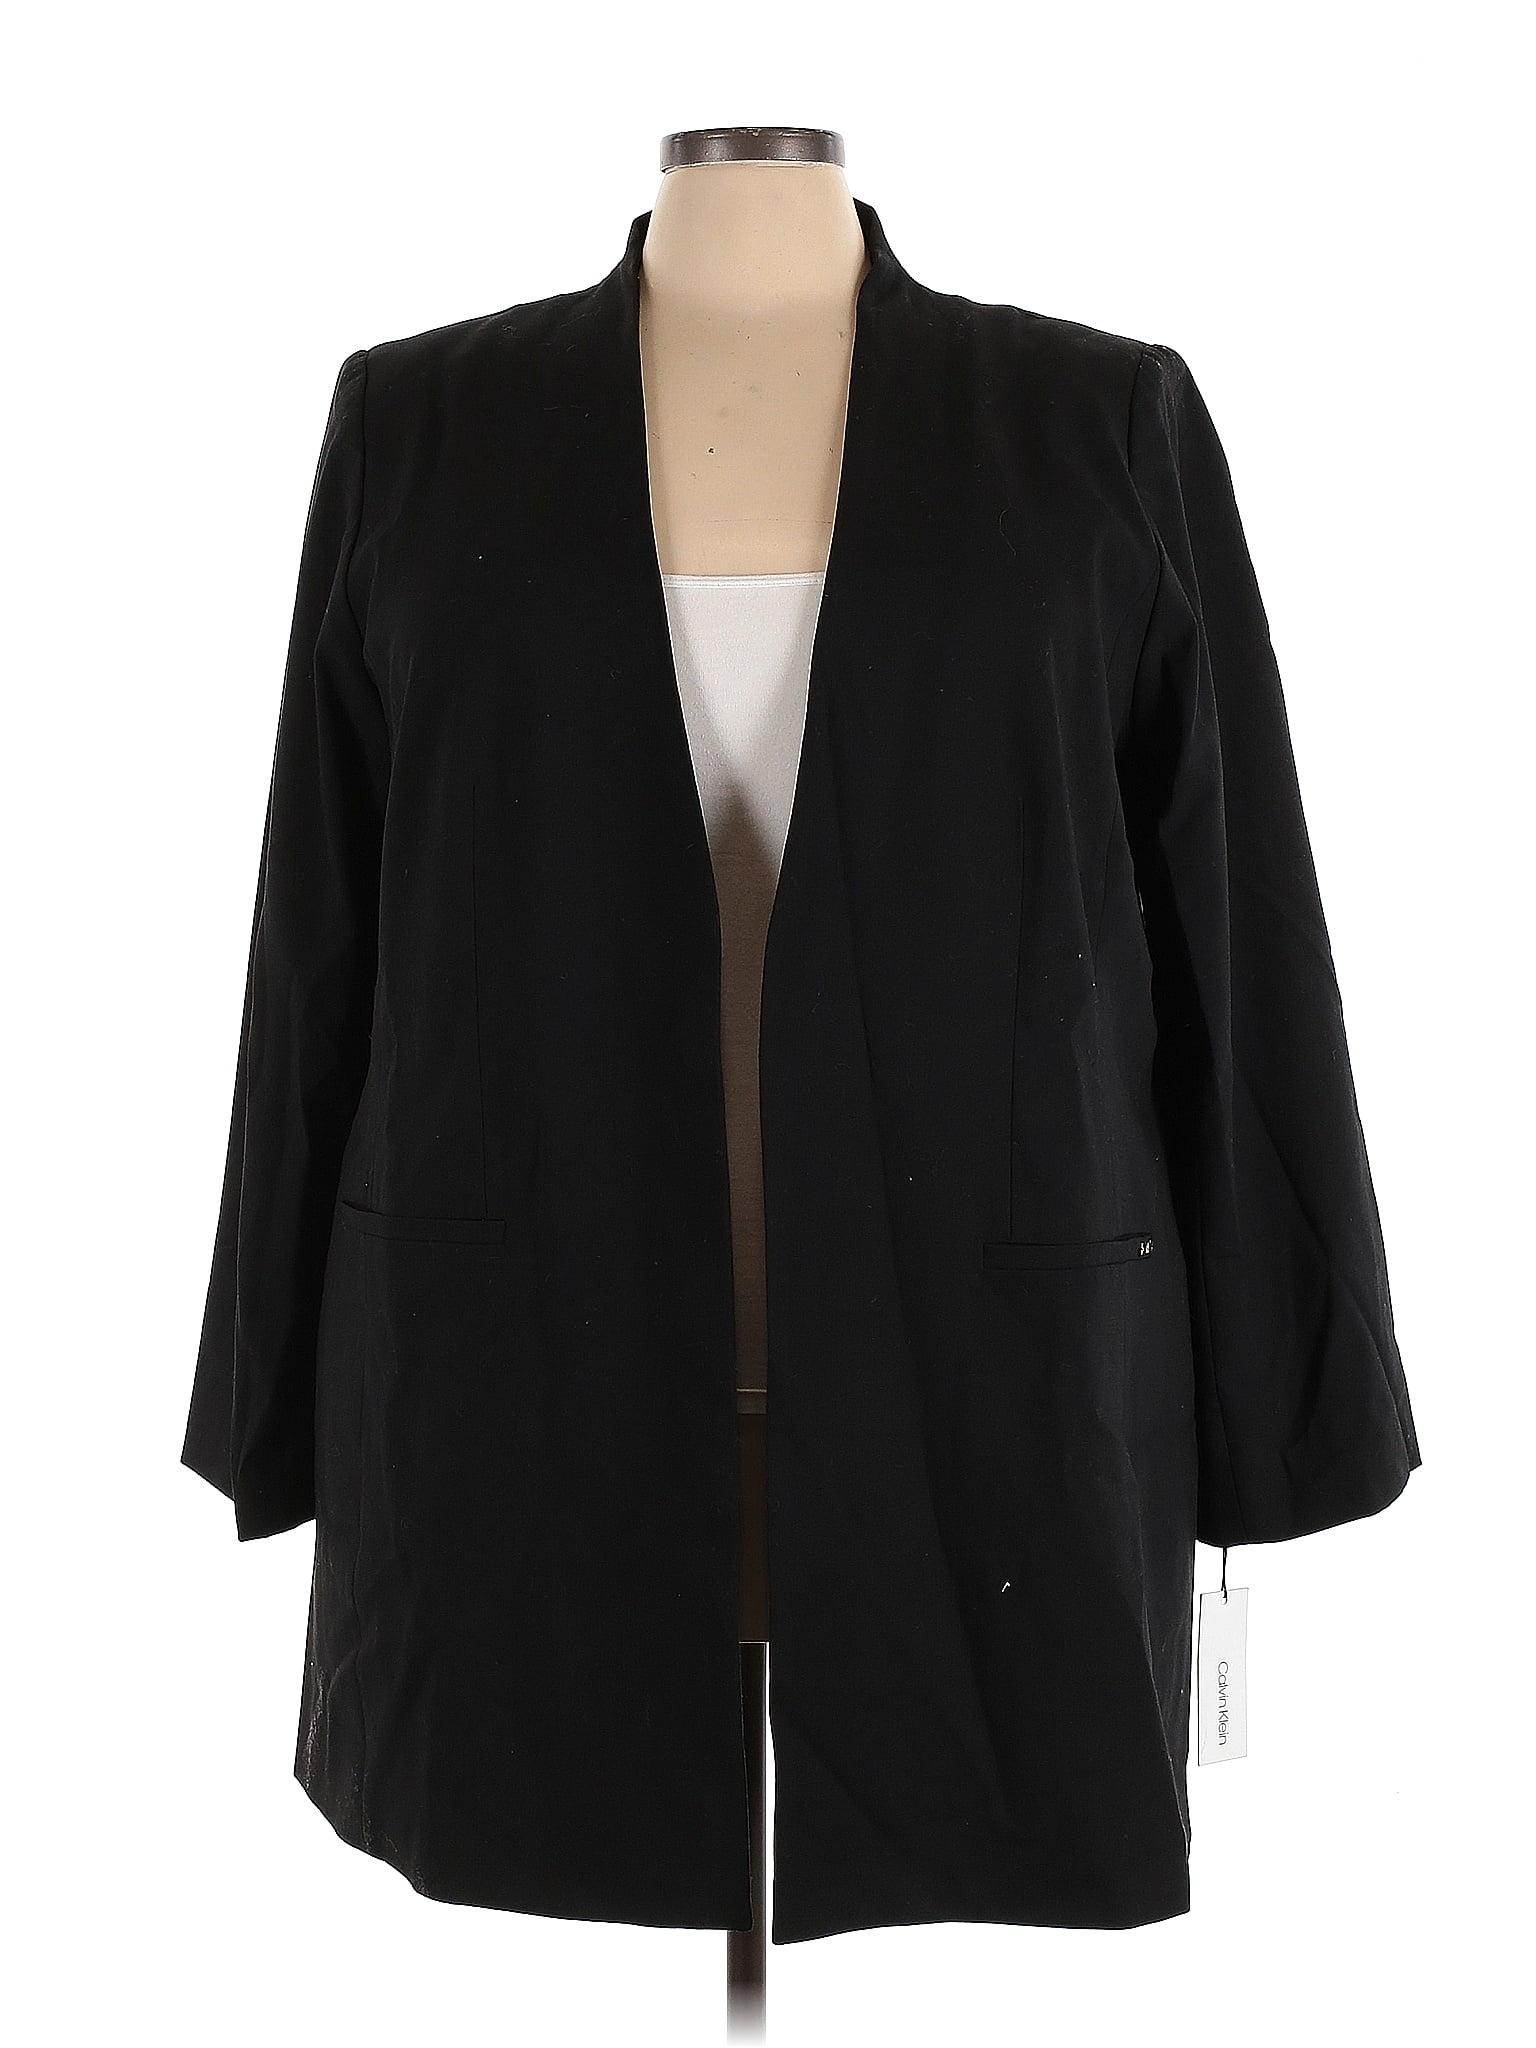 Calvin Klein Solid Black Jacket Size 24 (Plus) - 70% off | thredUP